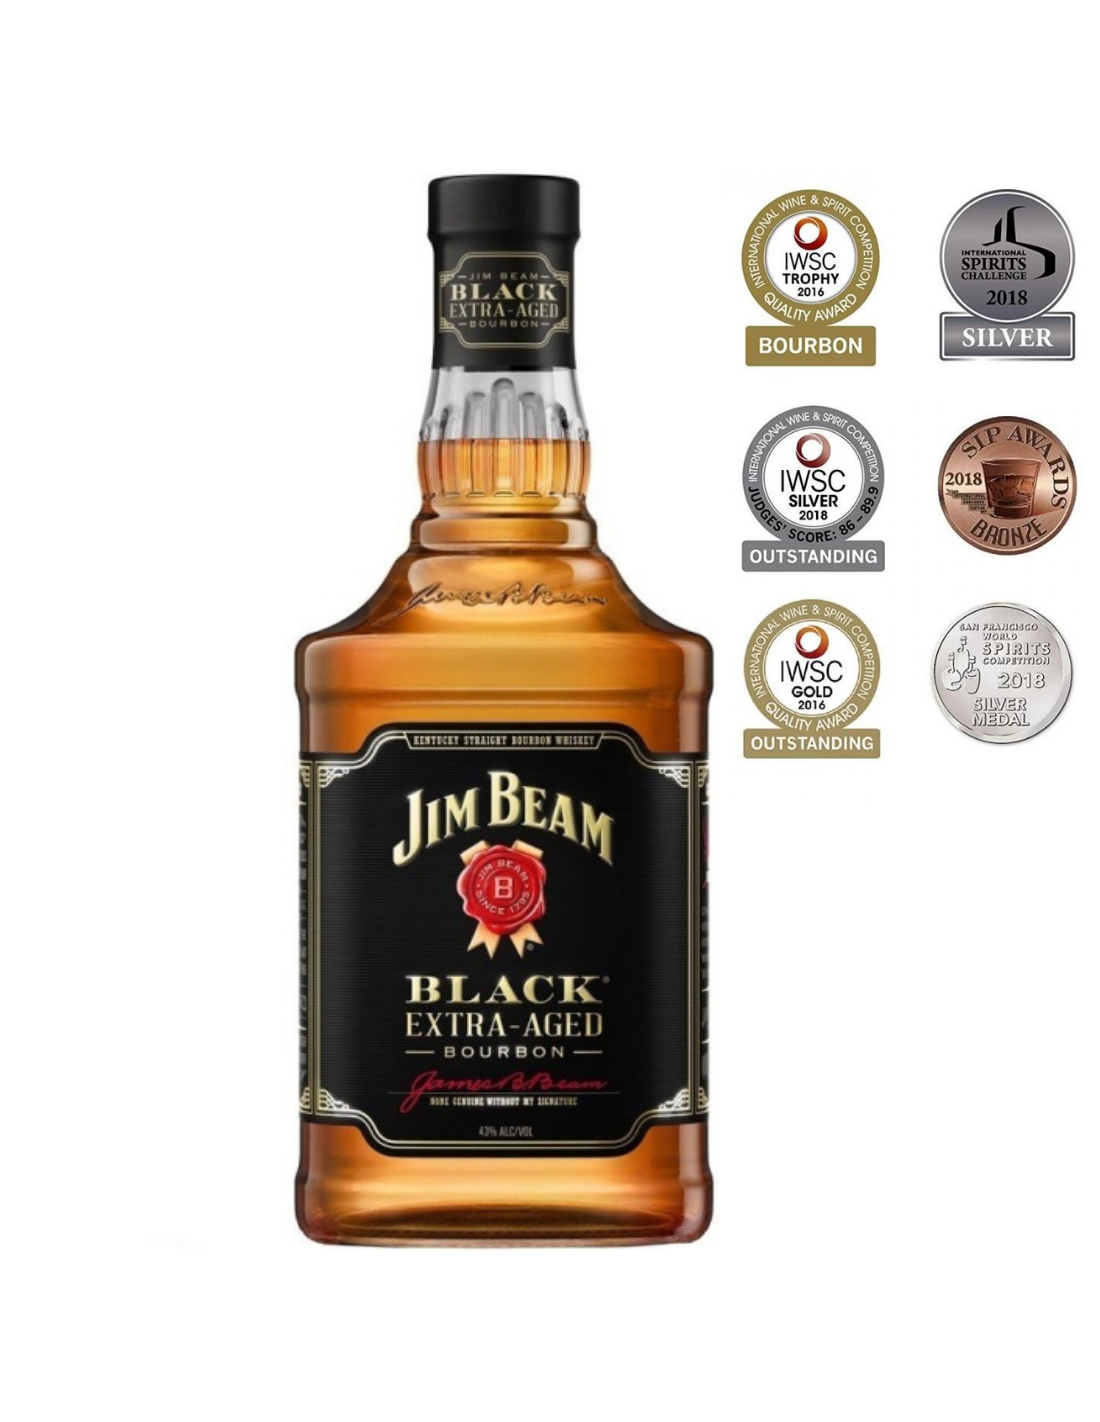 Whisky Jim Beam Black Label Extra Aged, 0.7L, 43% alc., SUA alcooldiscount.ro